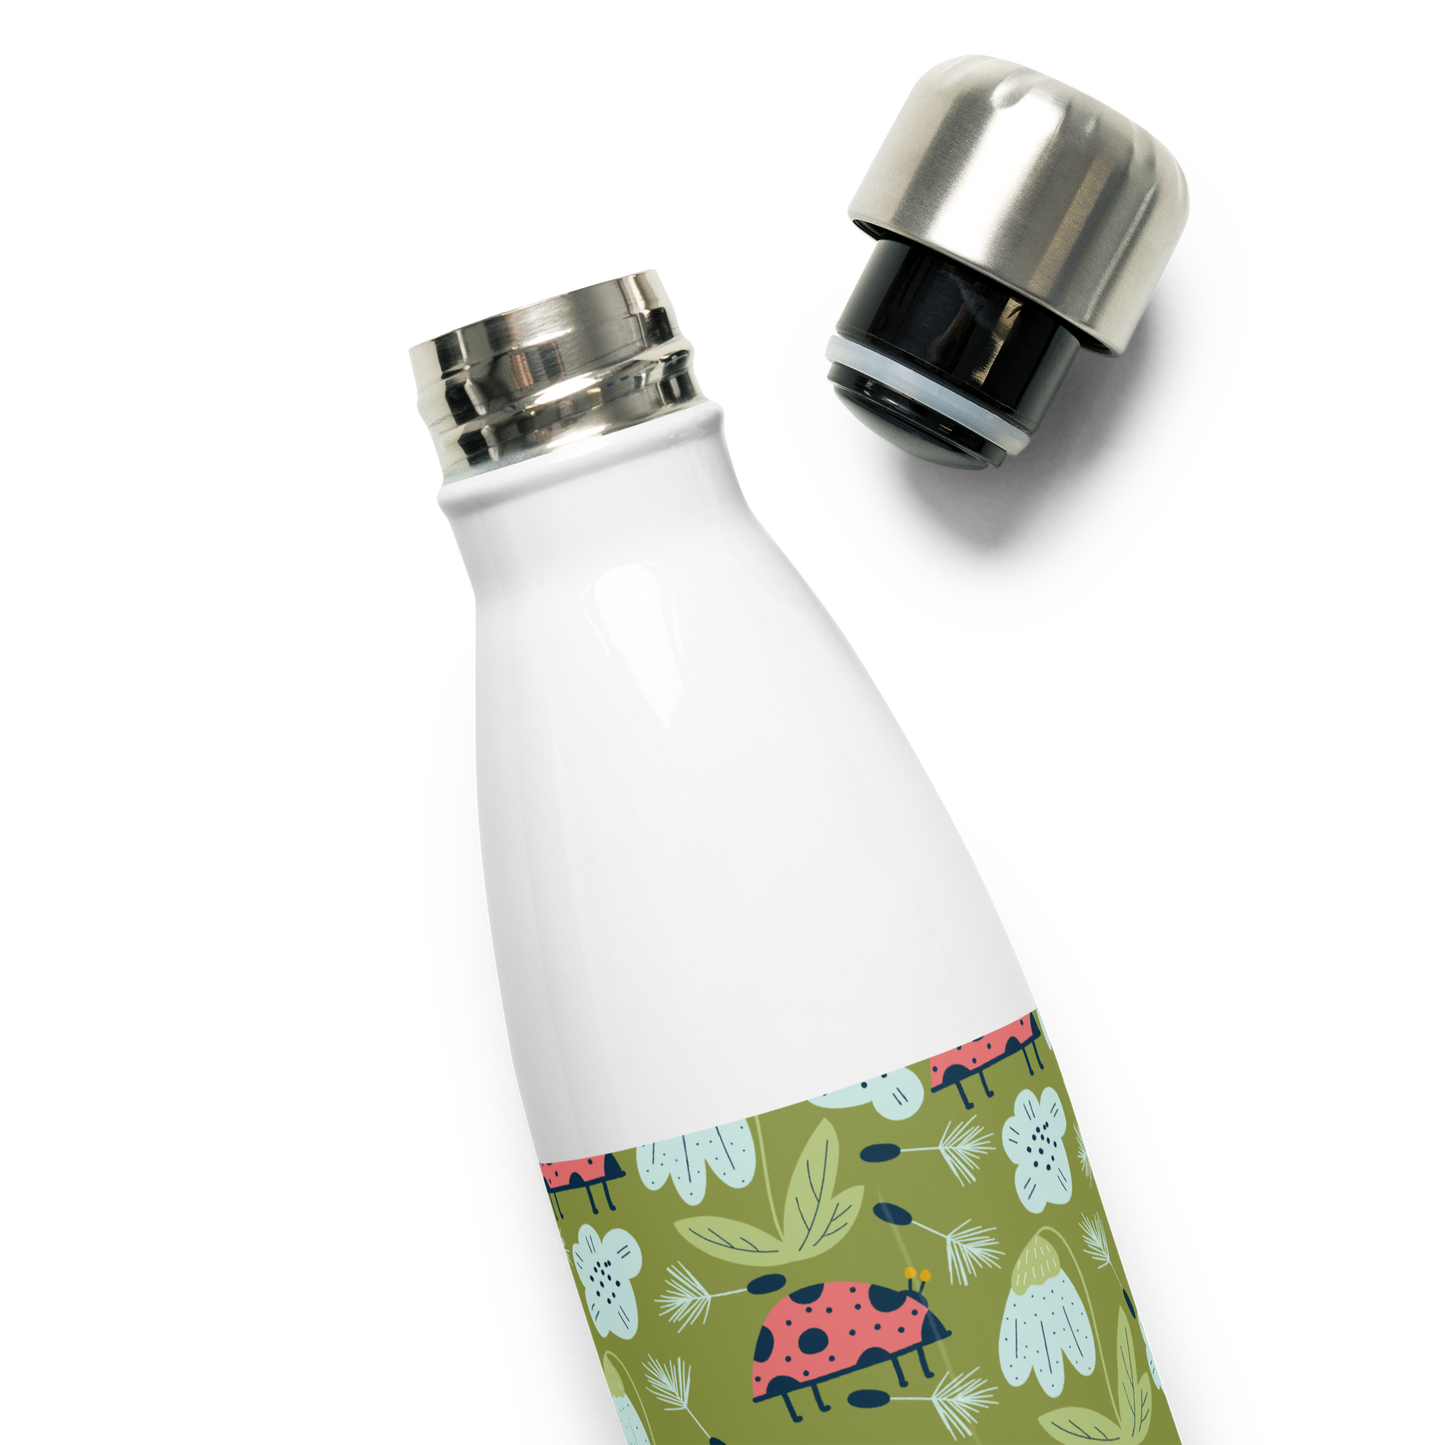 Scandinavian Spring Floral | Seamless Patterns | Stainless Steel Water Bottle - #5